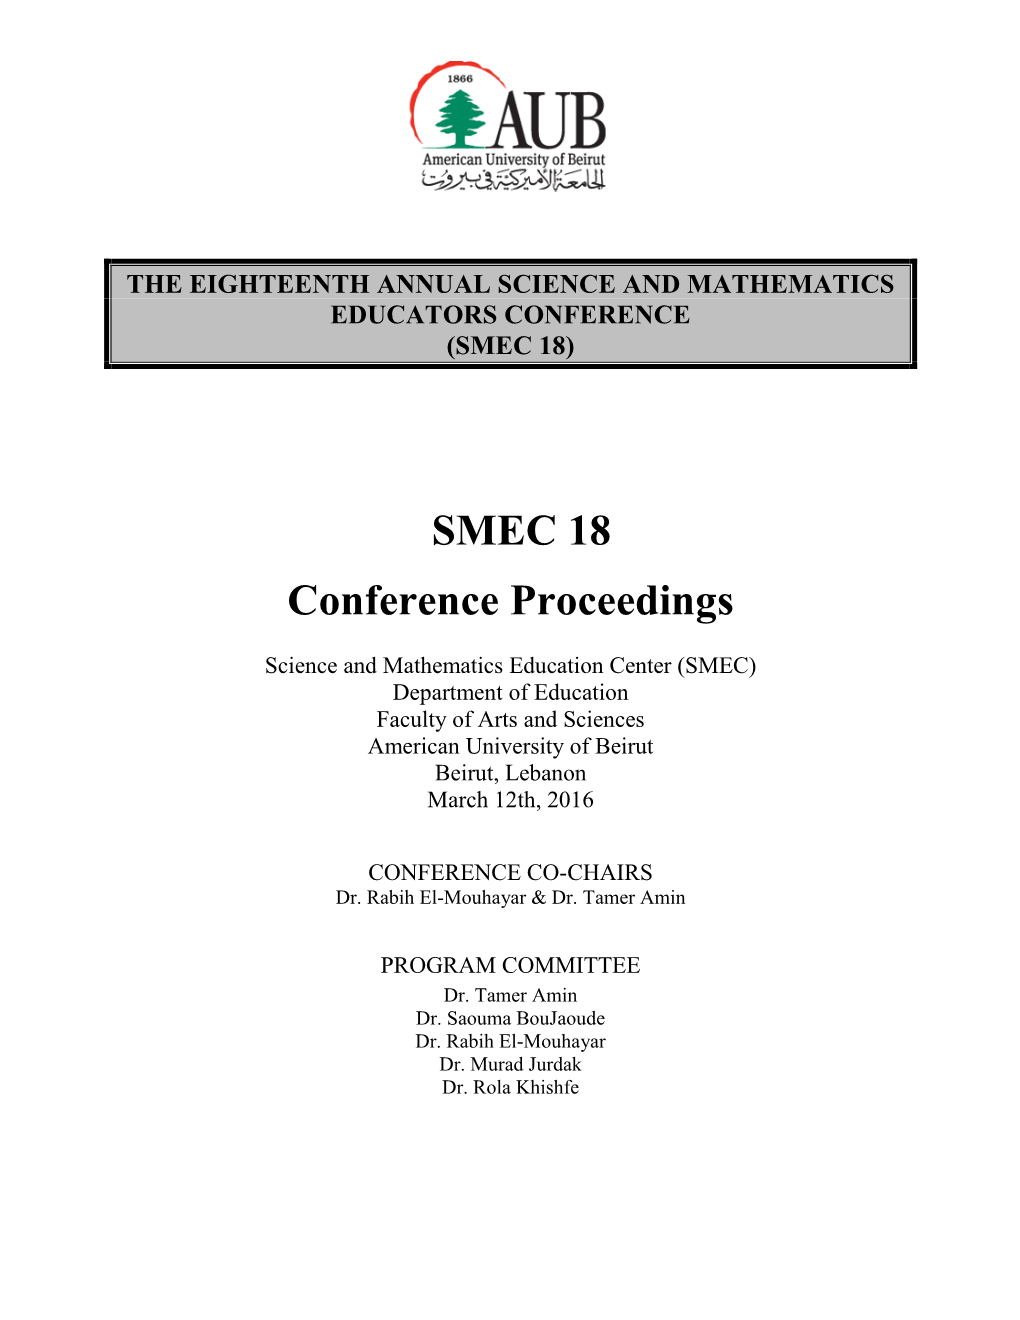 SMEC 18 Proceedings